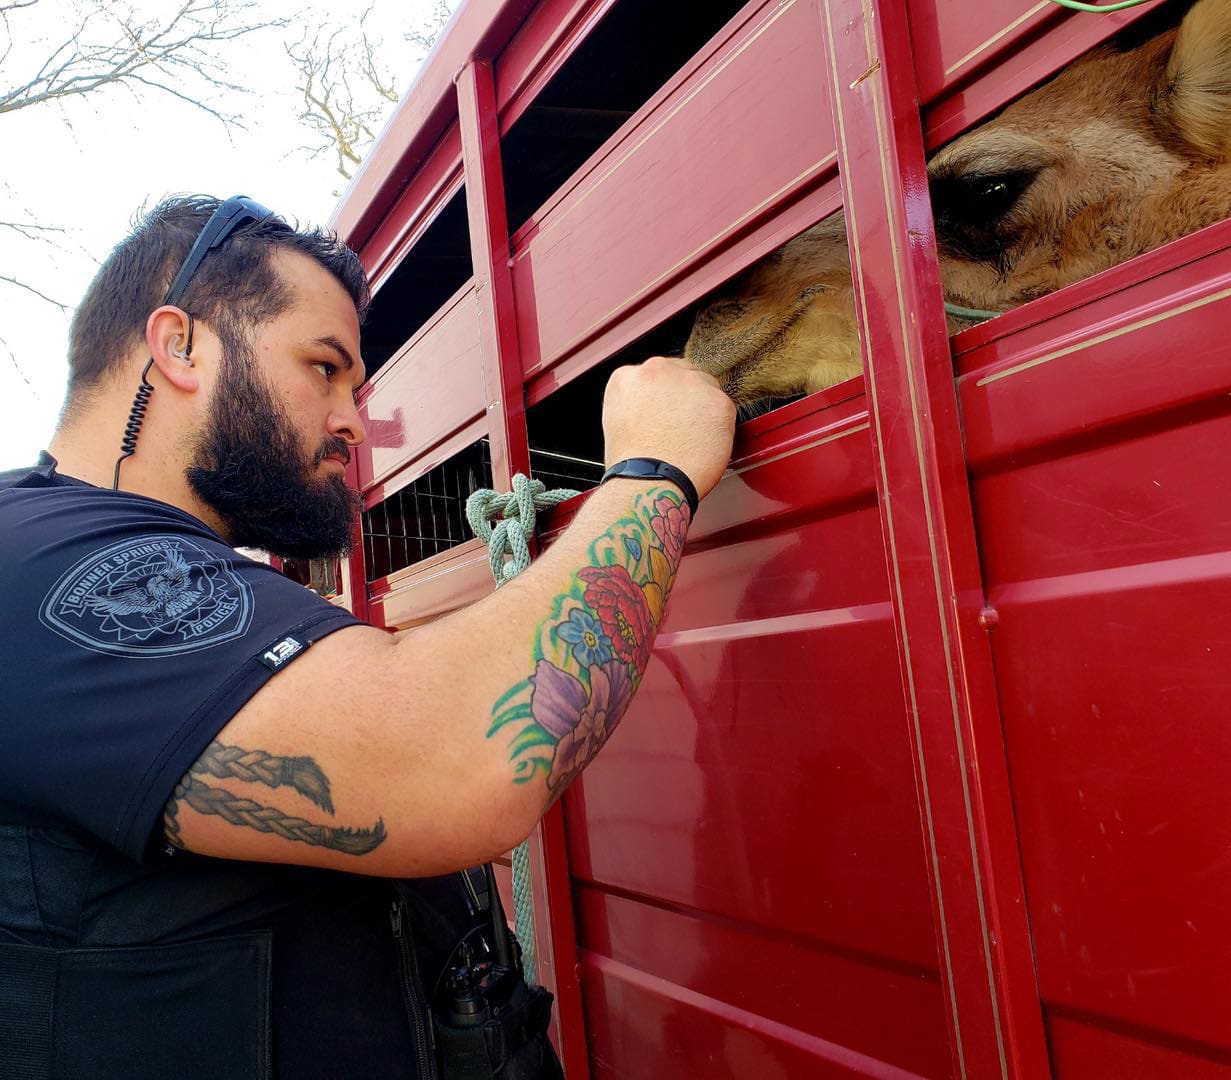 Camel causes chaos after fleeing Kansas nativity scene